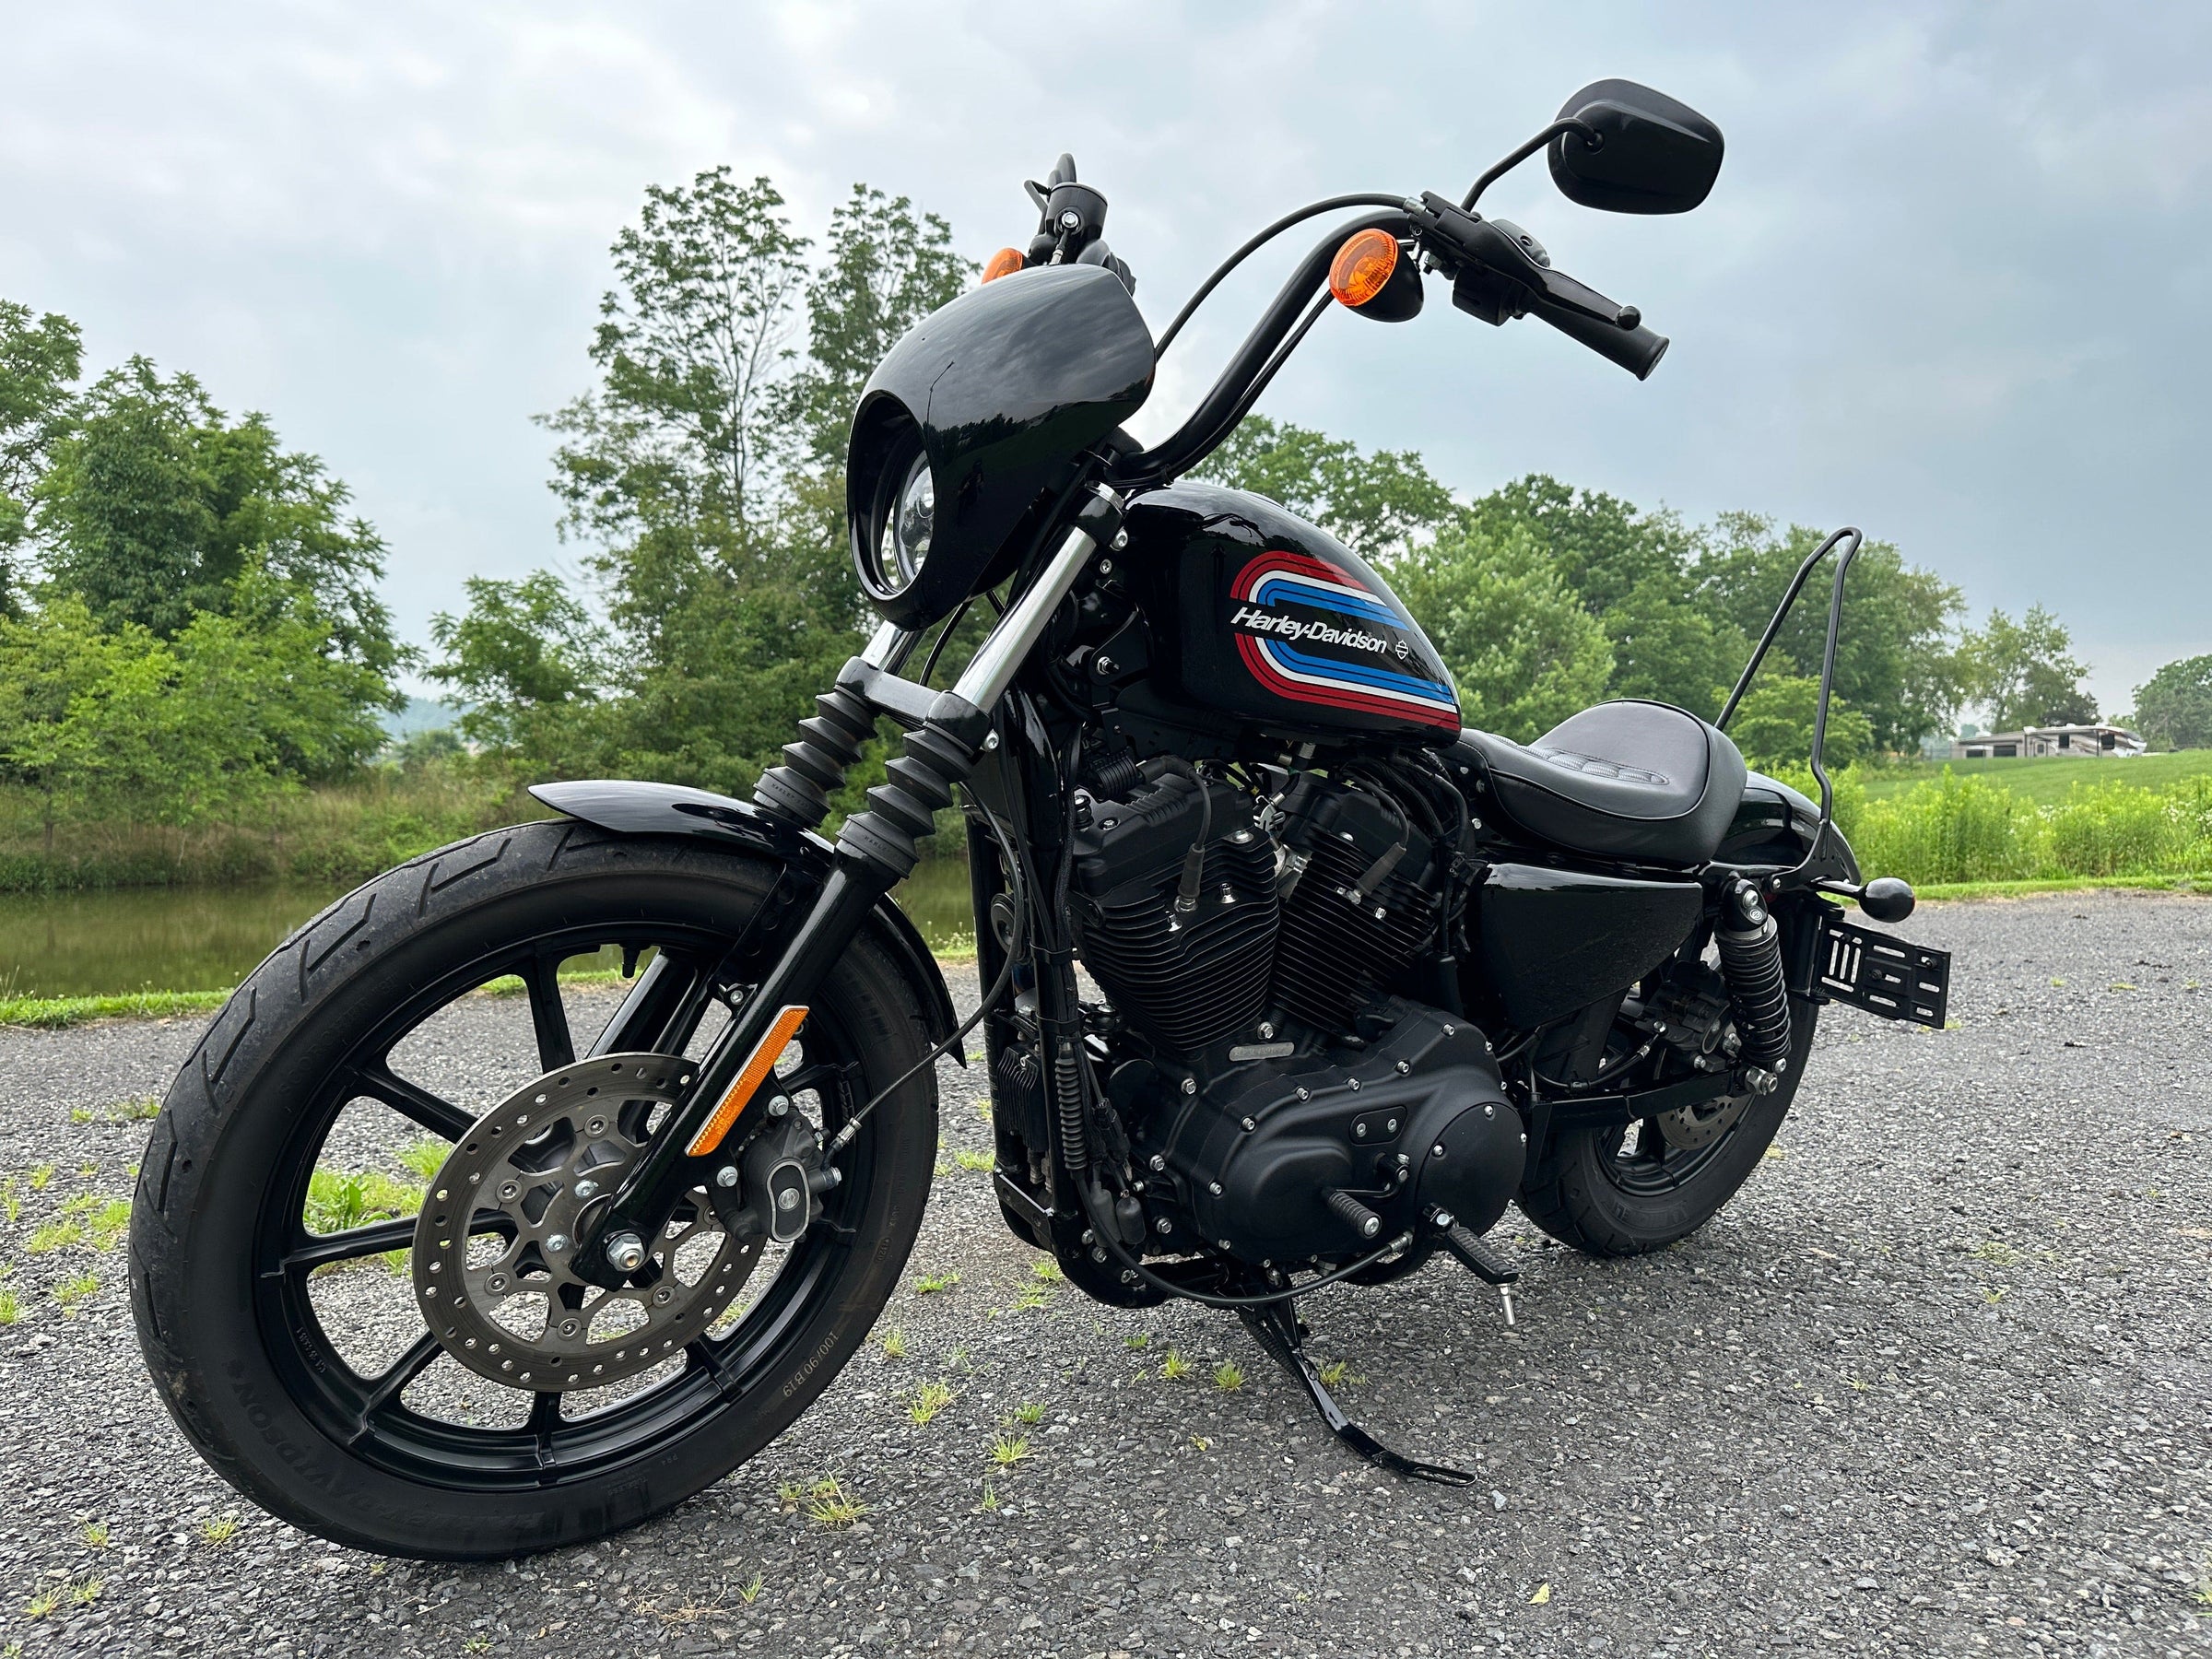 2020 Harley-Davidson Iron 1200 Quick Spin - Cycle News